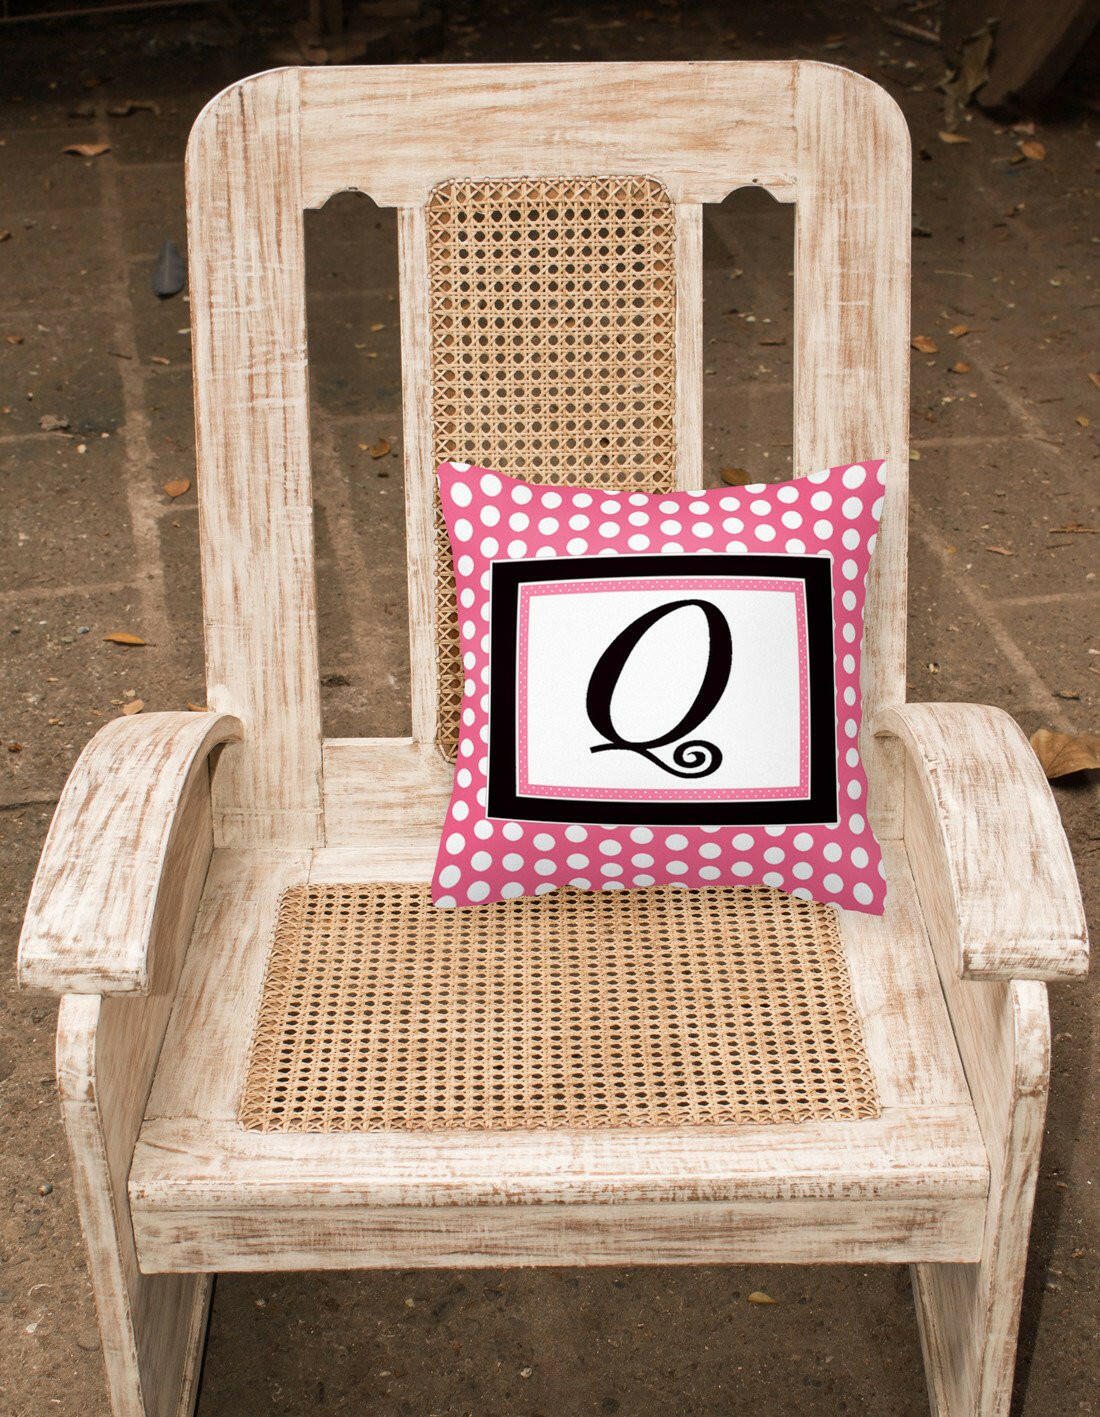 Letter Q Initial Monogram Pink Black Polka Dots Decorative Canvas Fabric Pillow - the-store.com